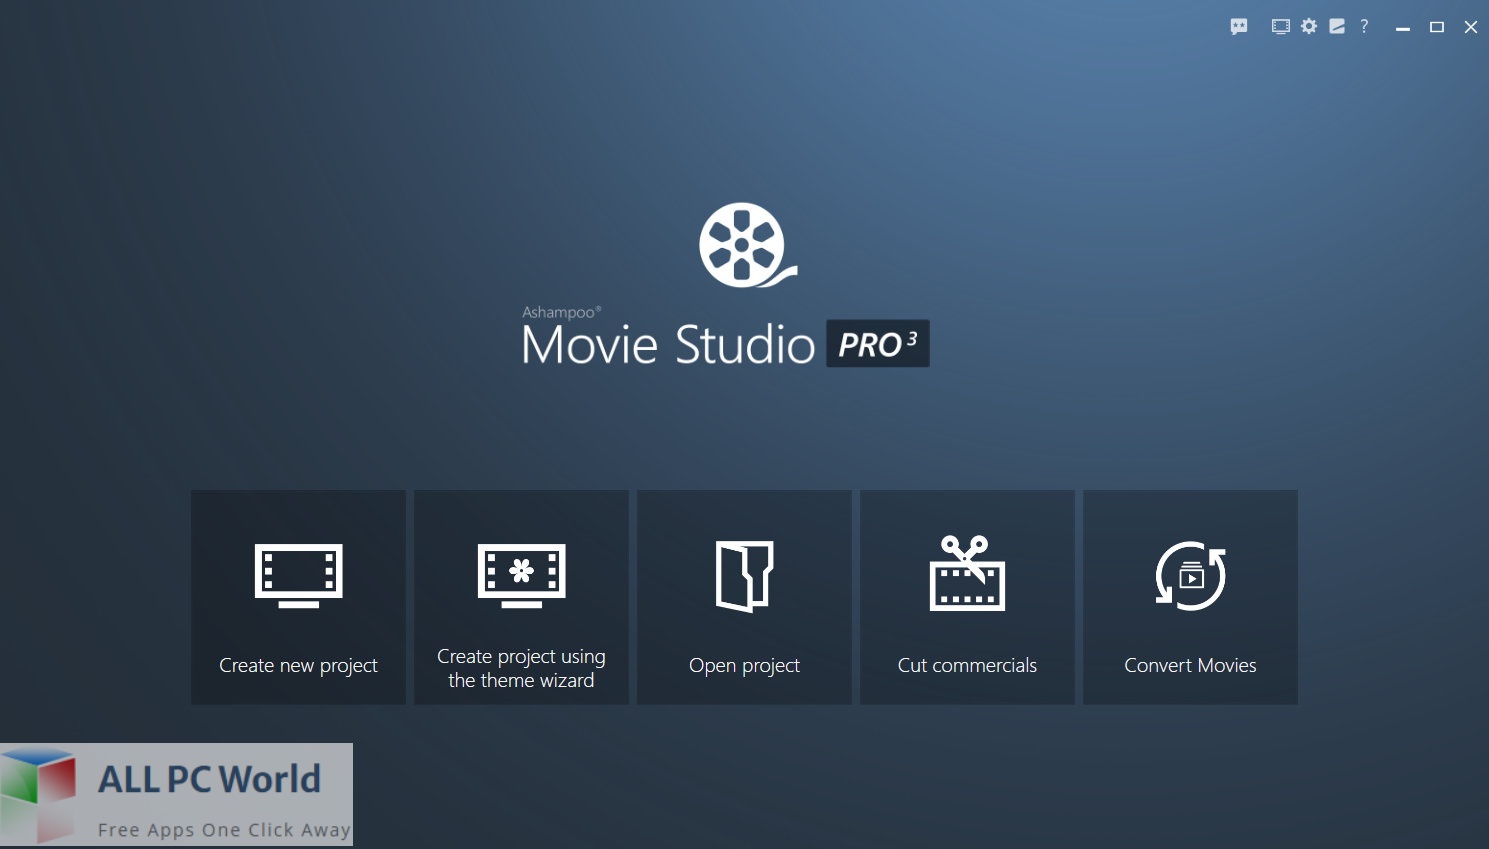 Ashampoo Movie Studio Pro 3 Free Download